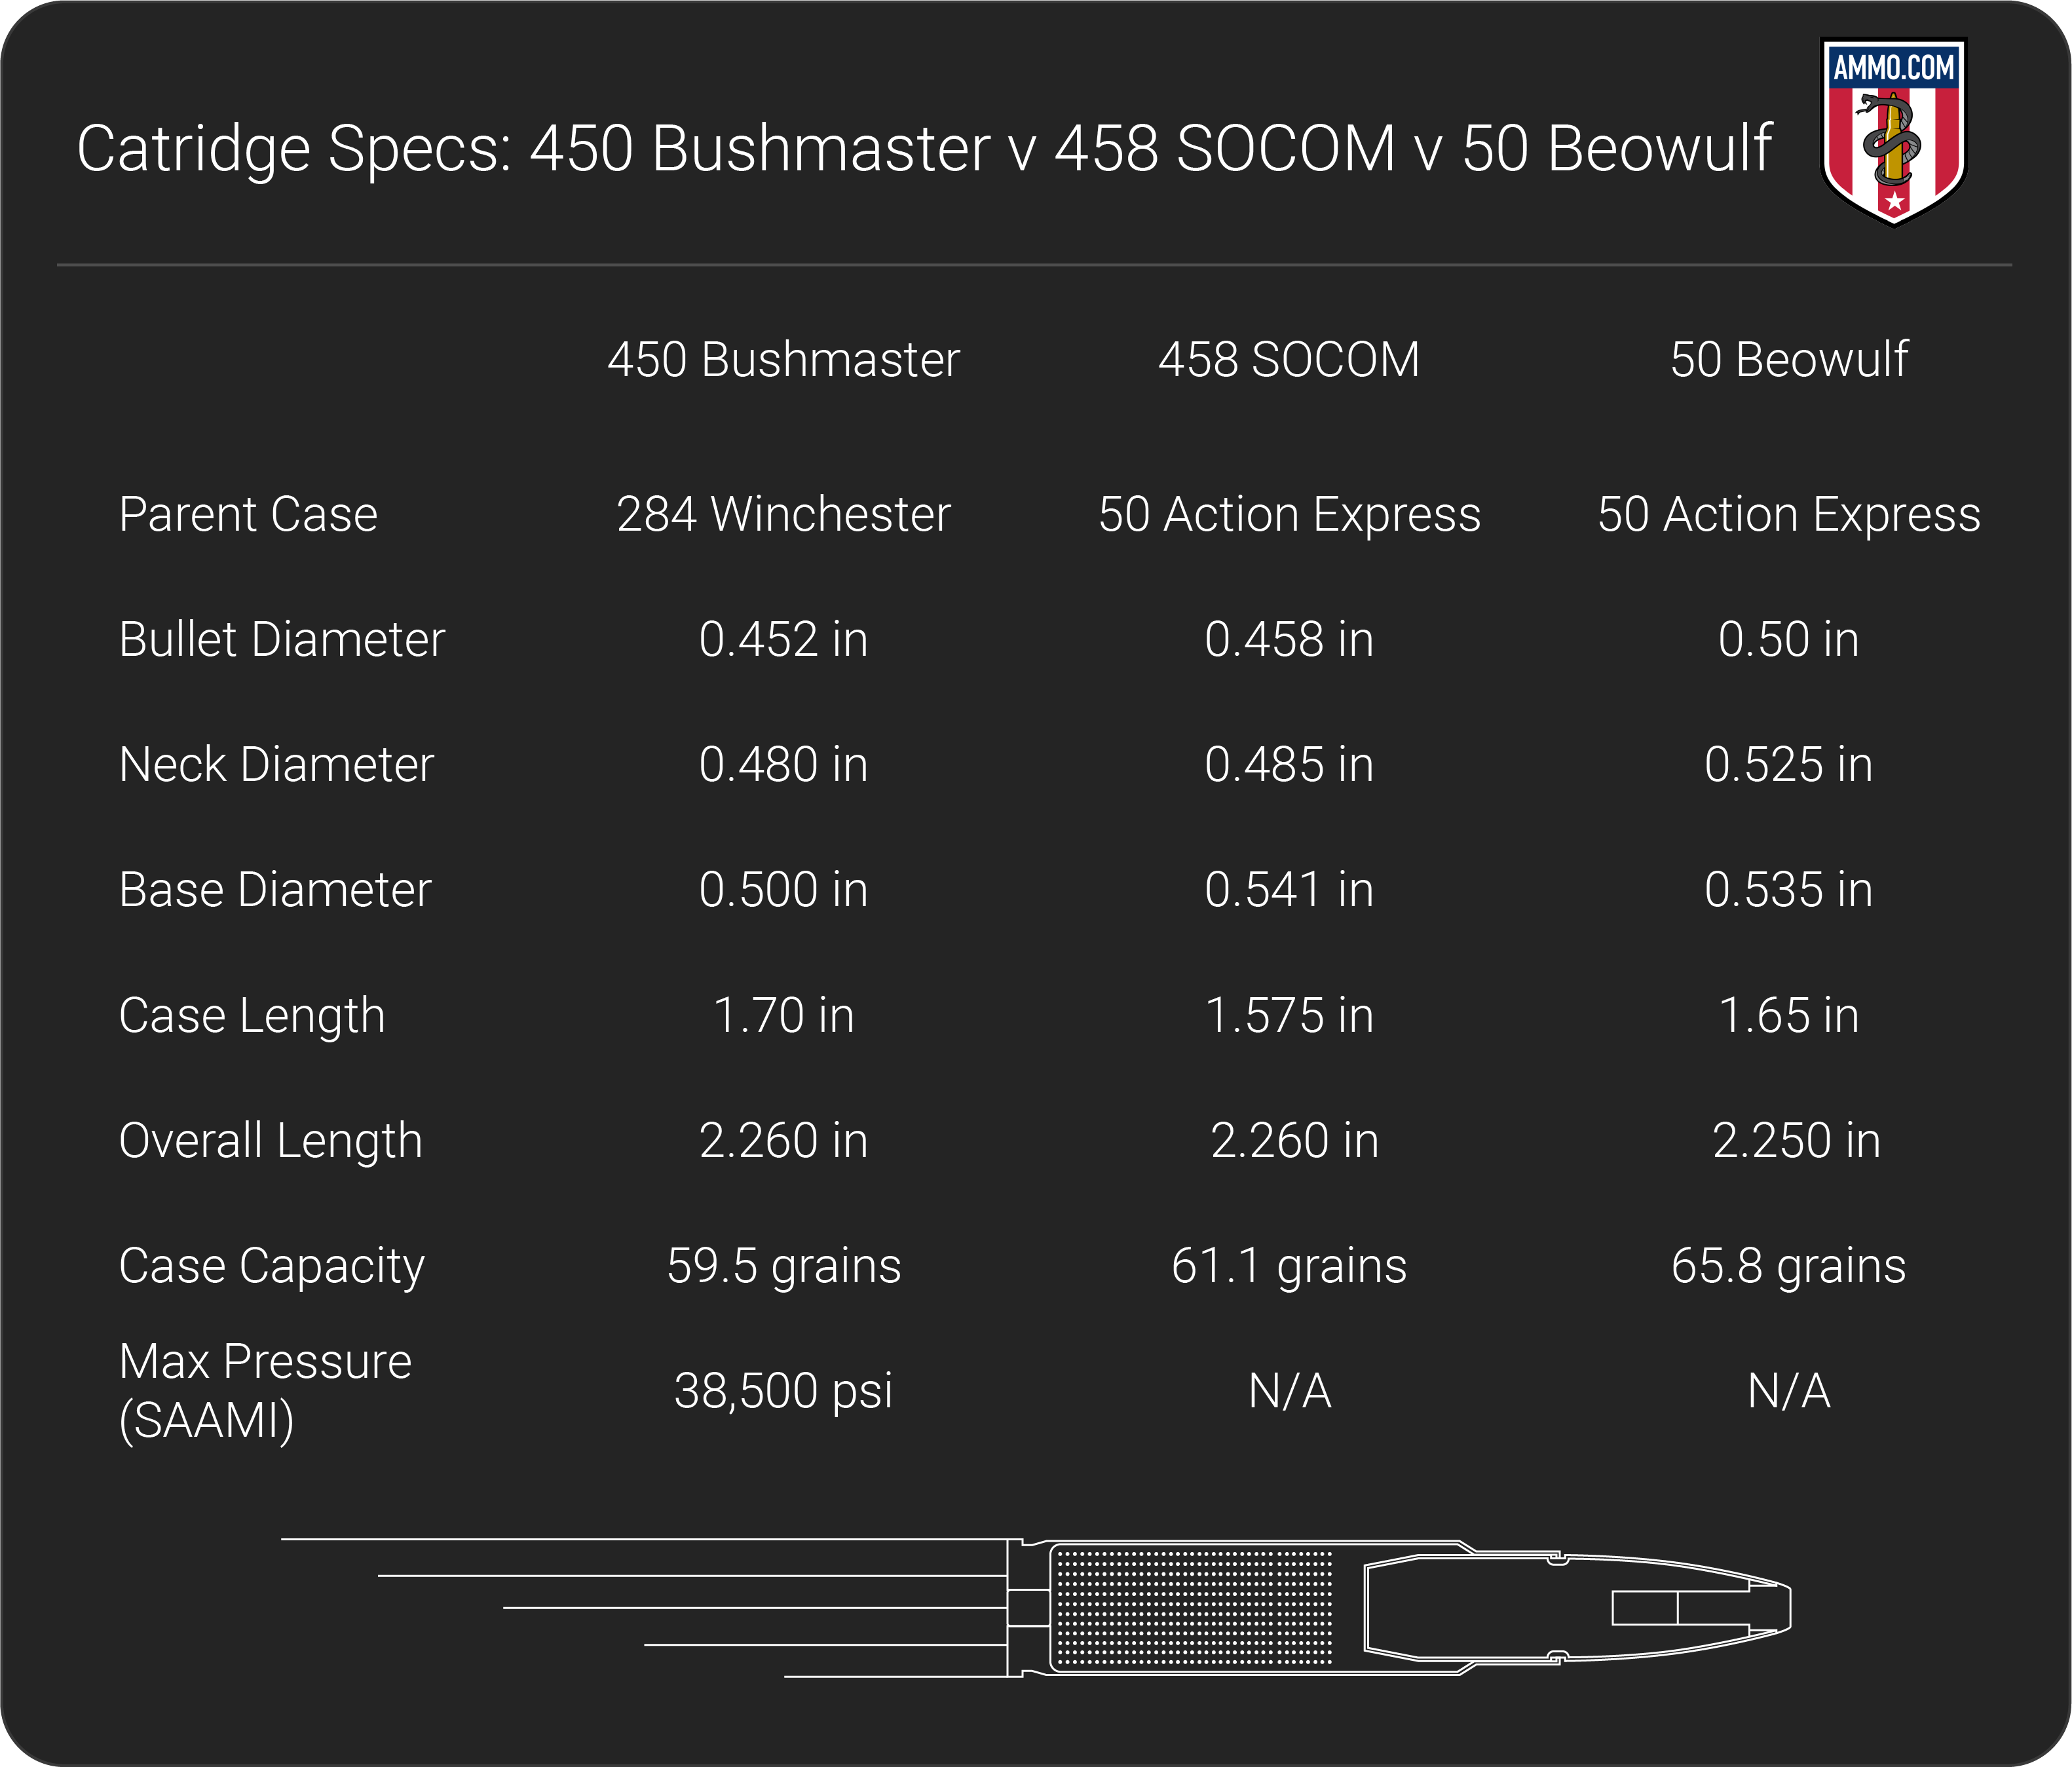 450 Bushmaster vs 458 SOCOM vs 50 Beowulf dimension chart